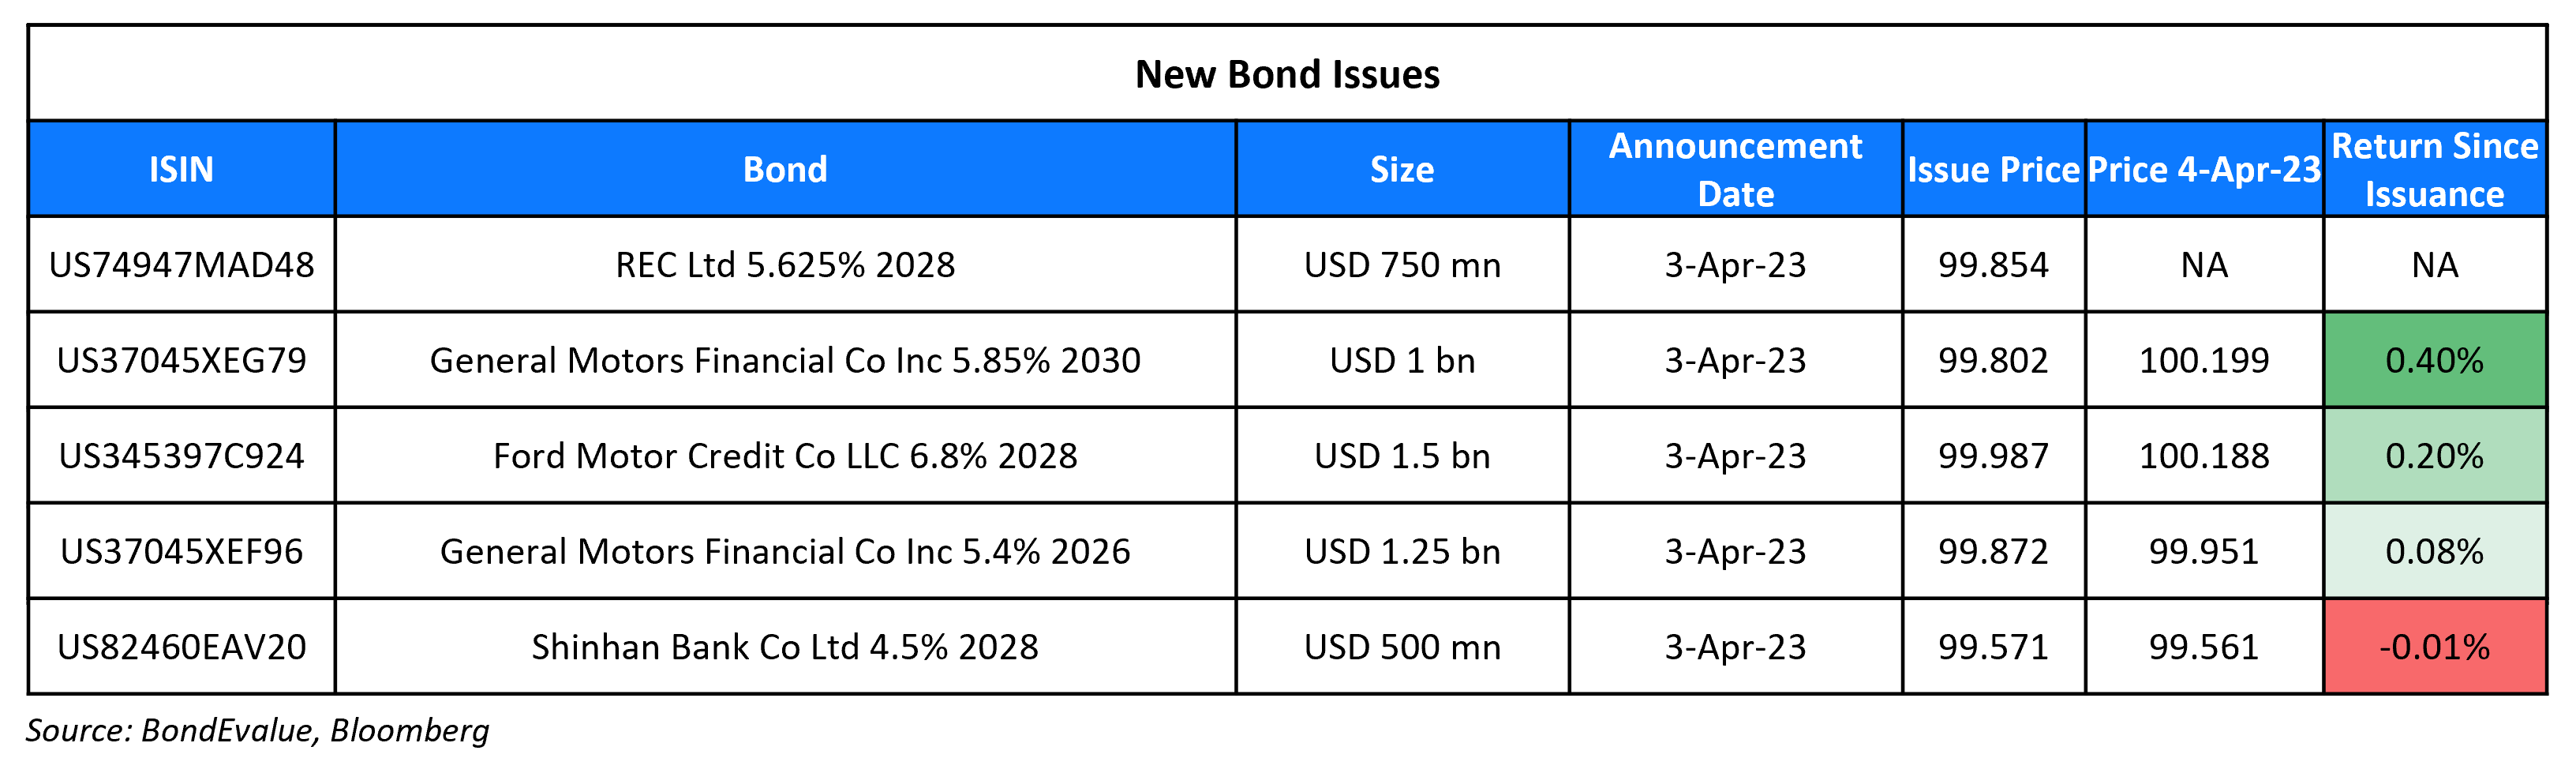 New Bond Issues 4 Apr 23